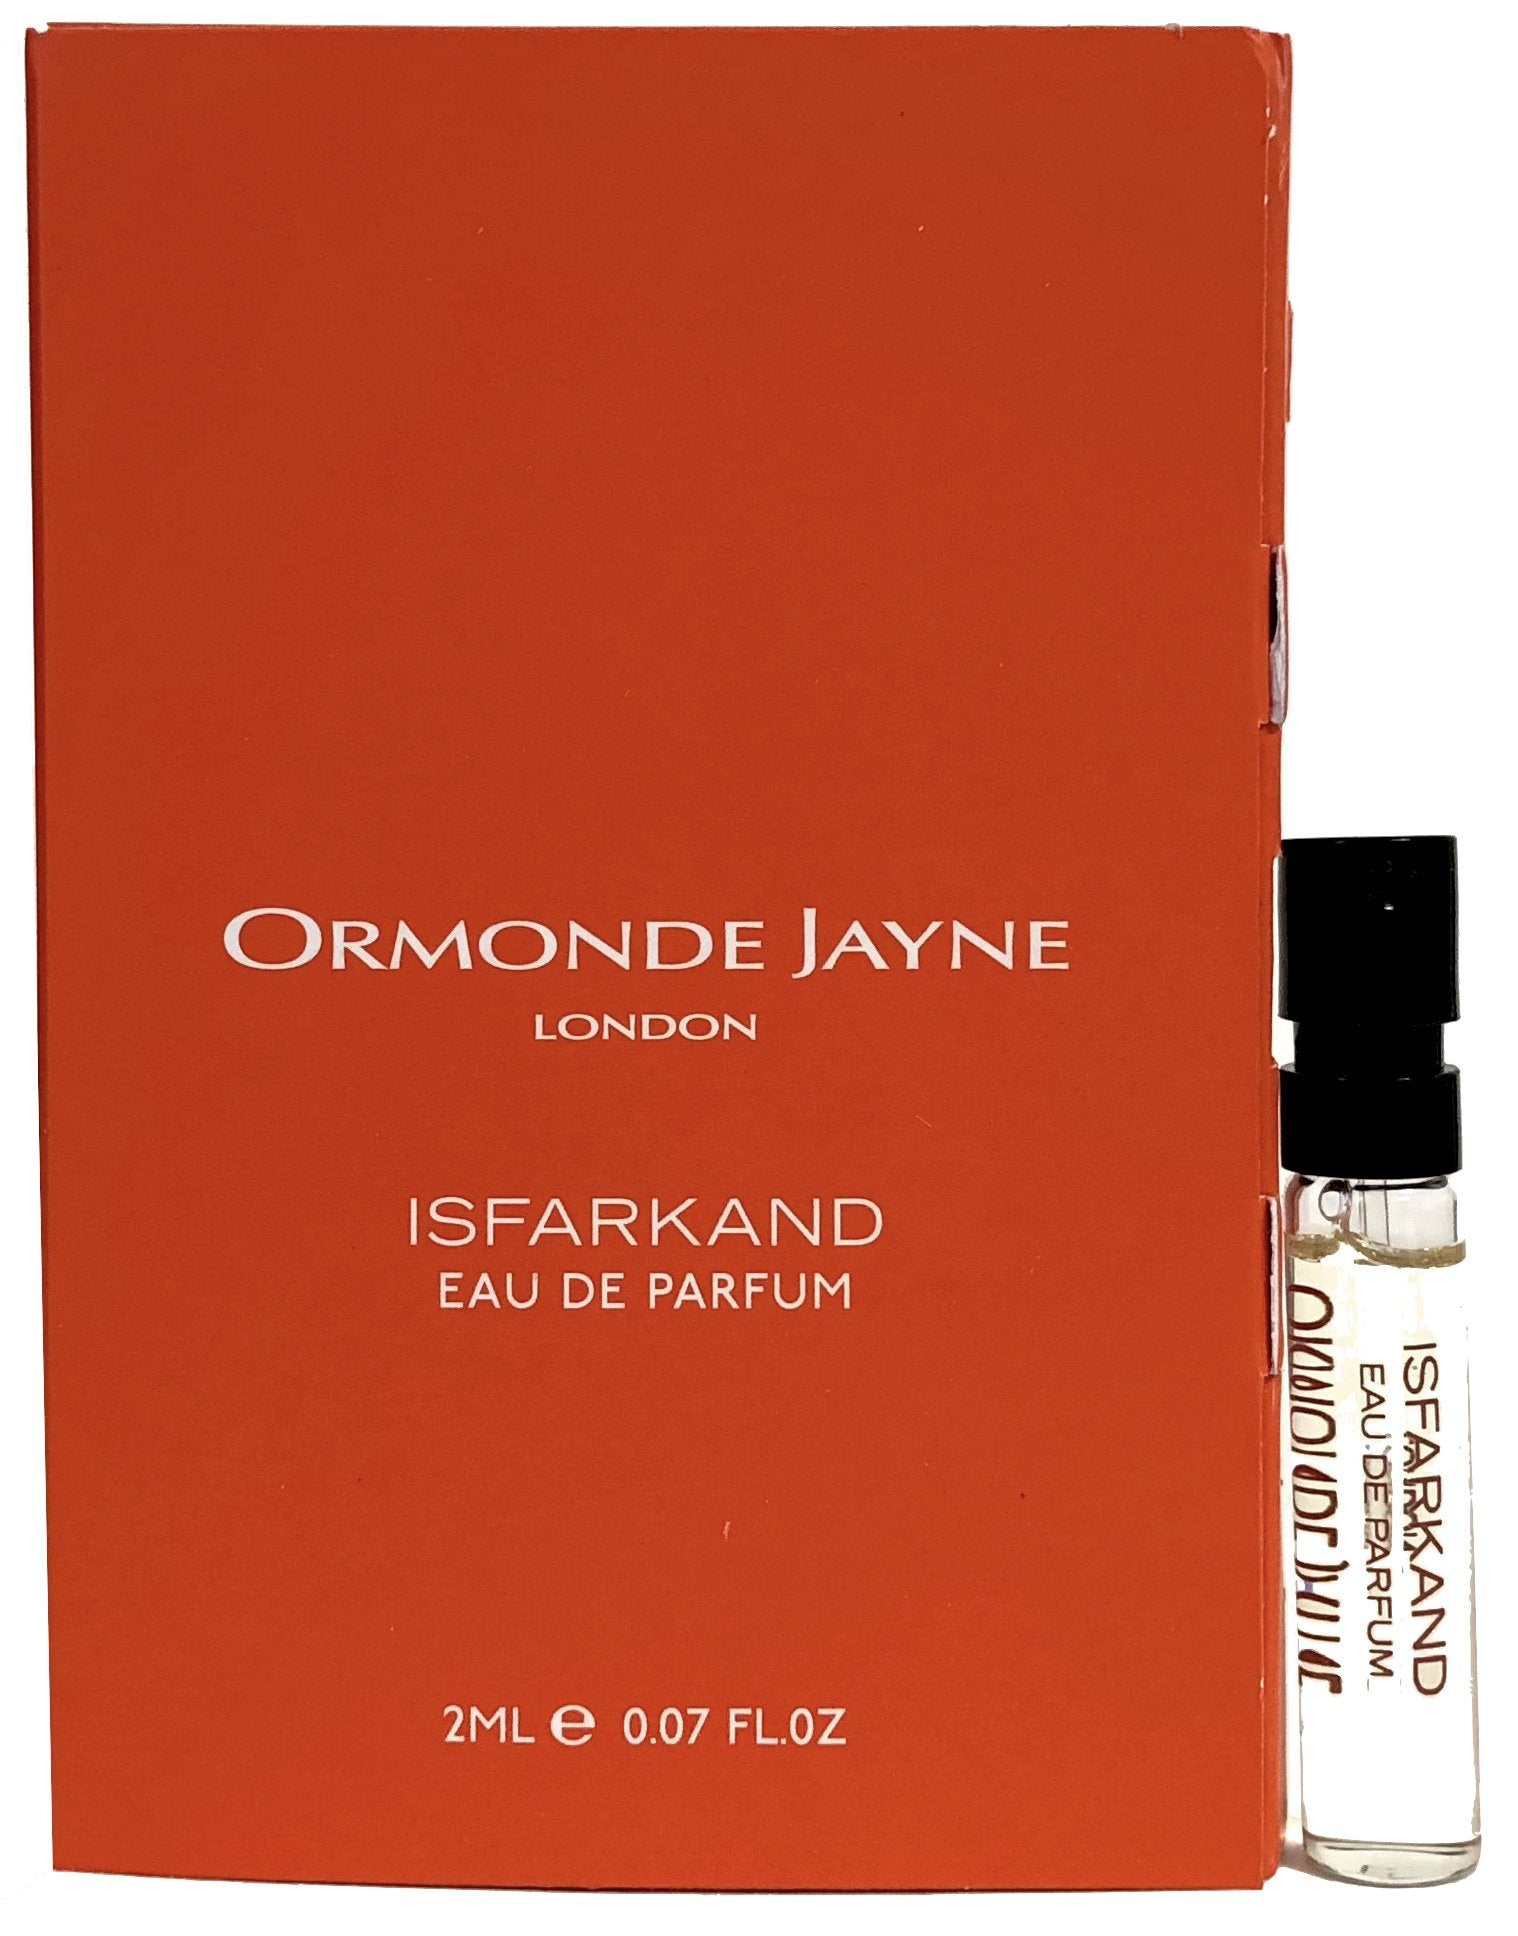 Ormonde Jayne Isfarkand 2ml offisielle parfymeprøver